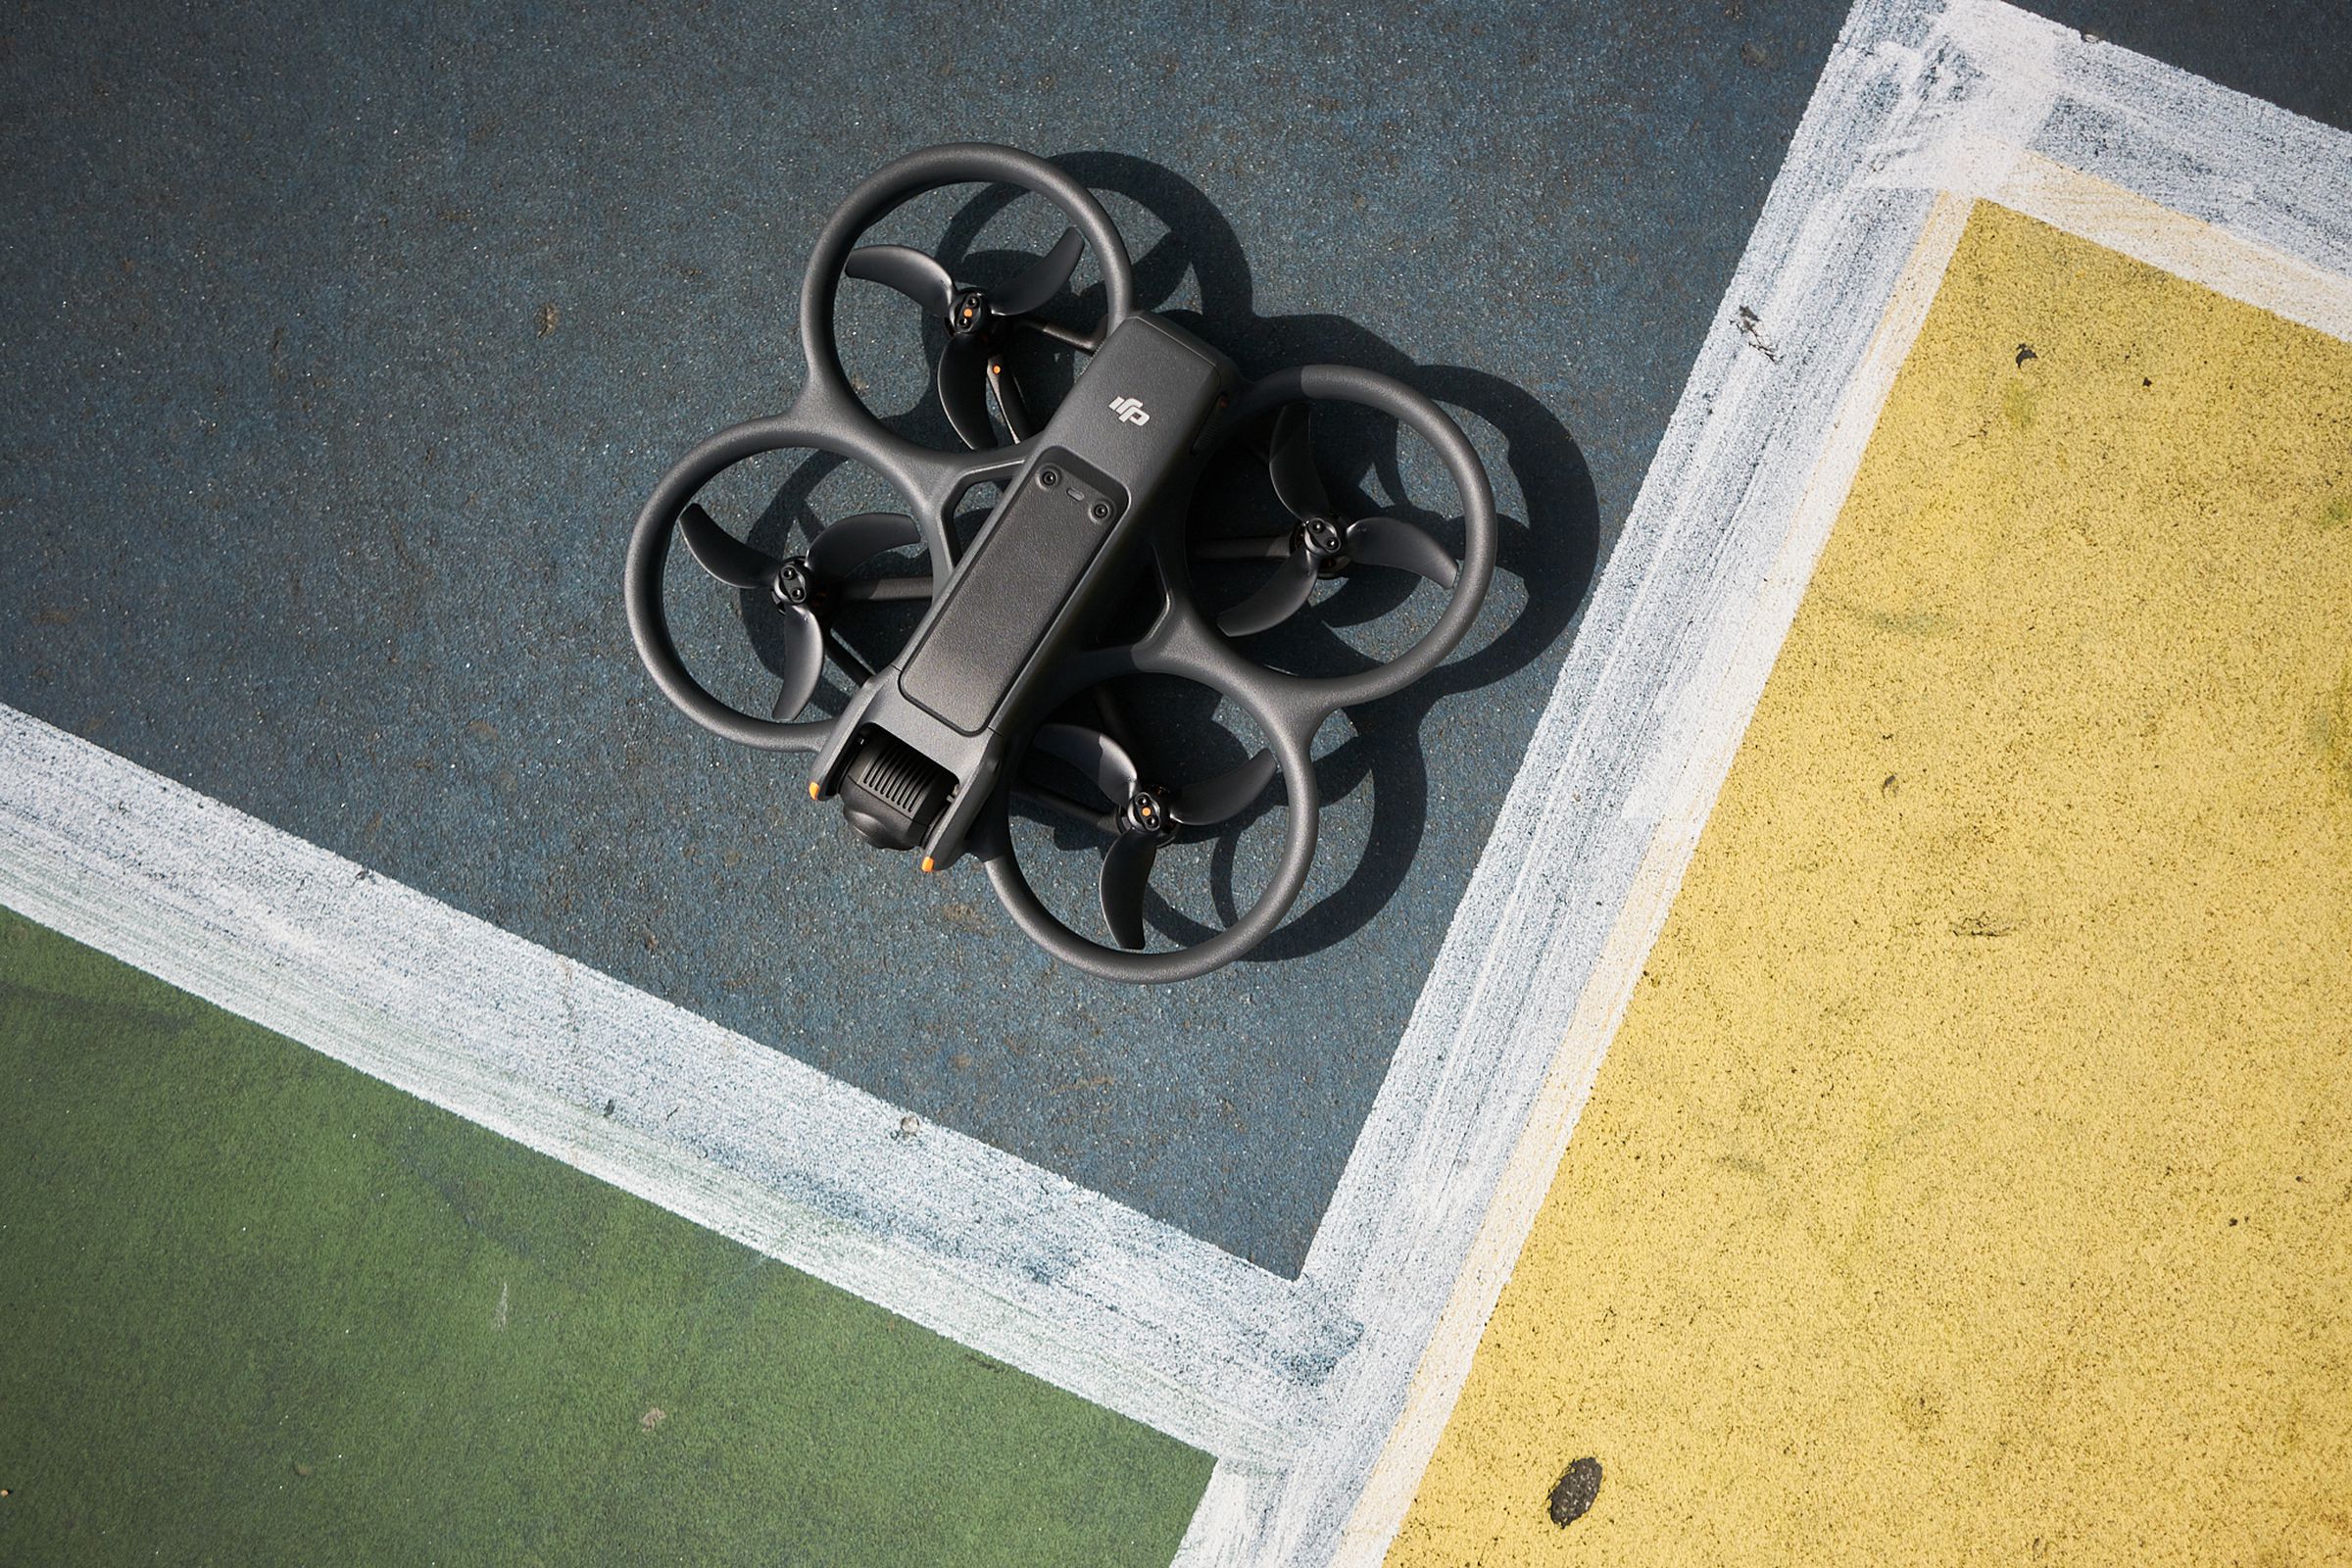 A photo showing DJI’s Avata 2 drone on pavement.